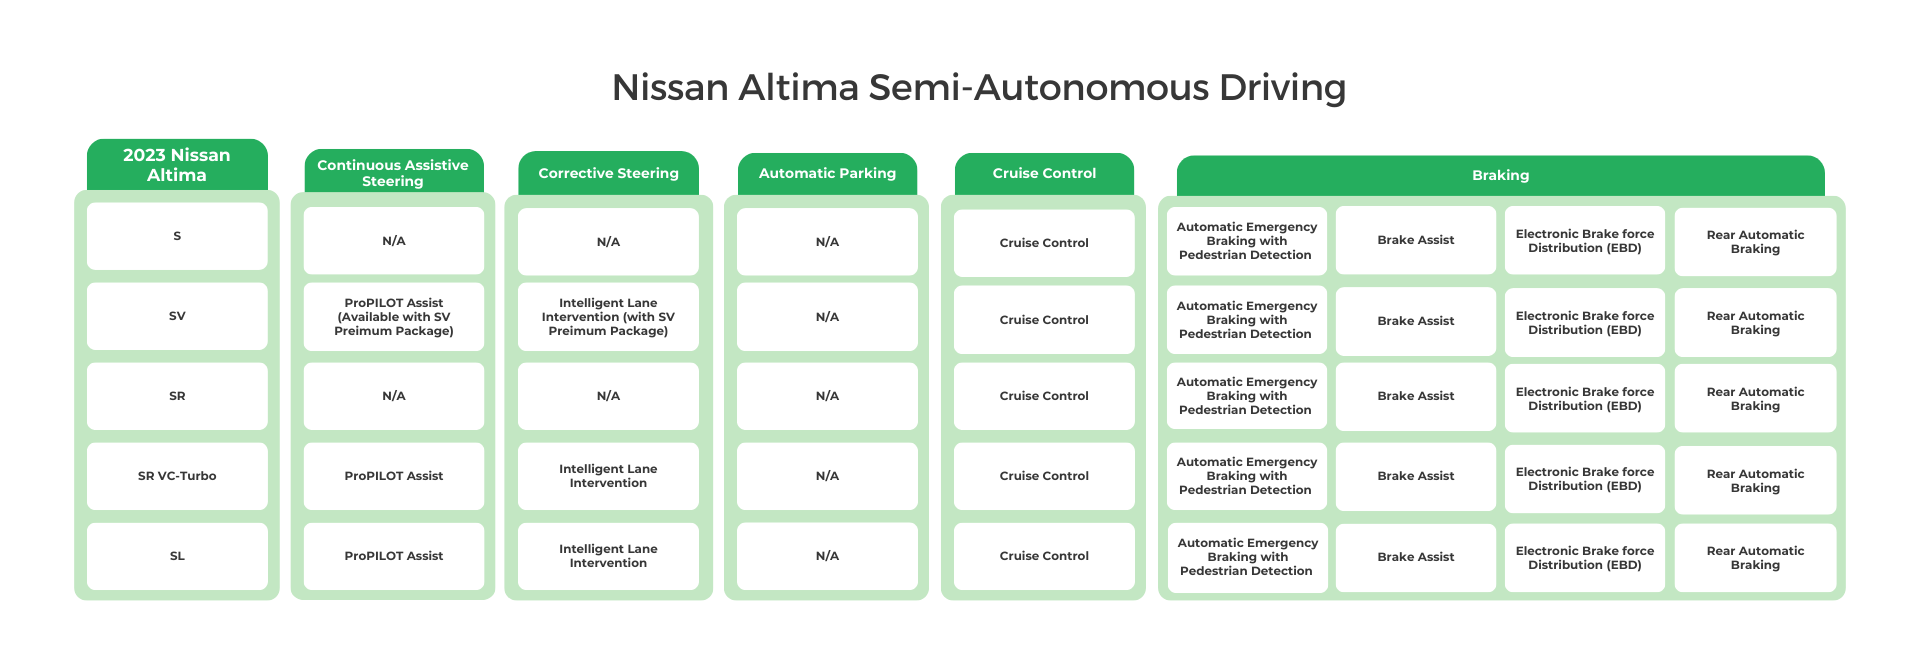 2023 Nissan Altima Semi-Autonomous Driving